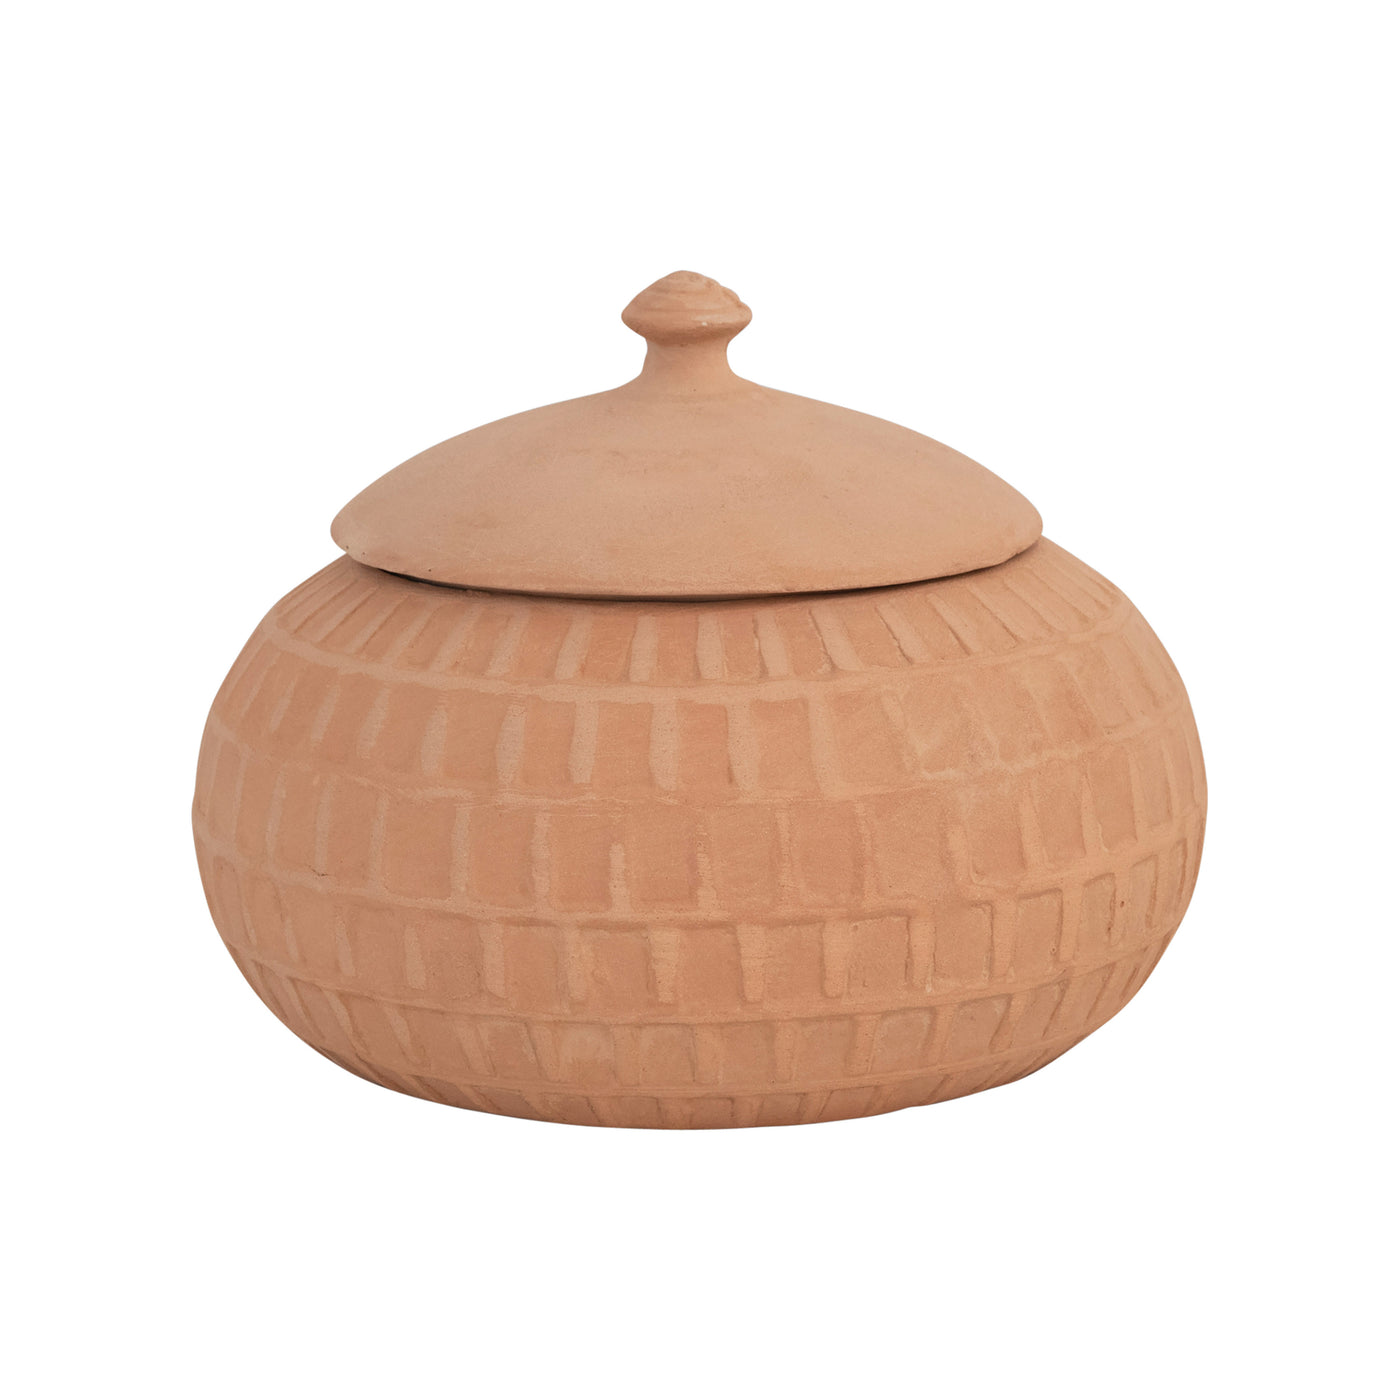 Carved Handmade Terra-cotta Jar with Lid